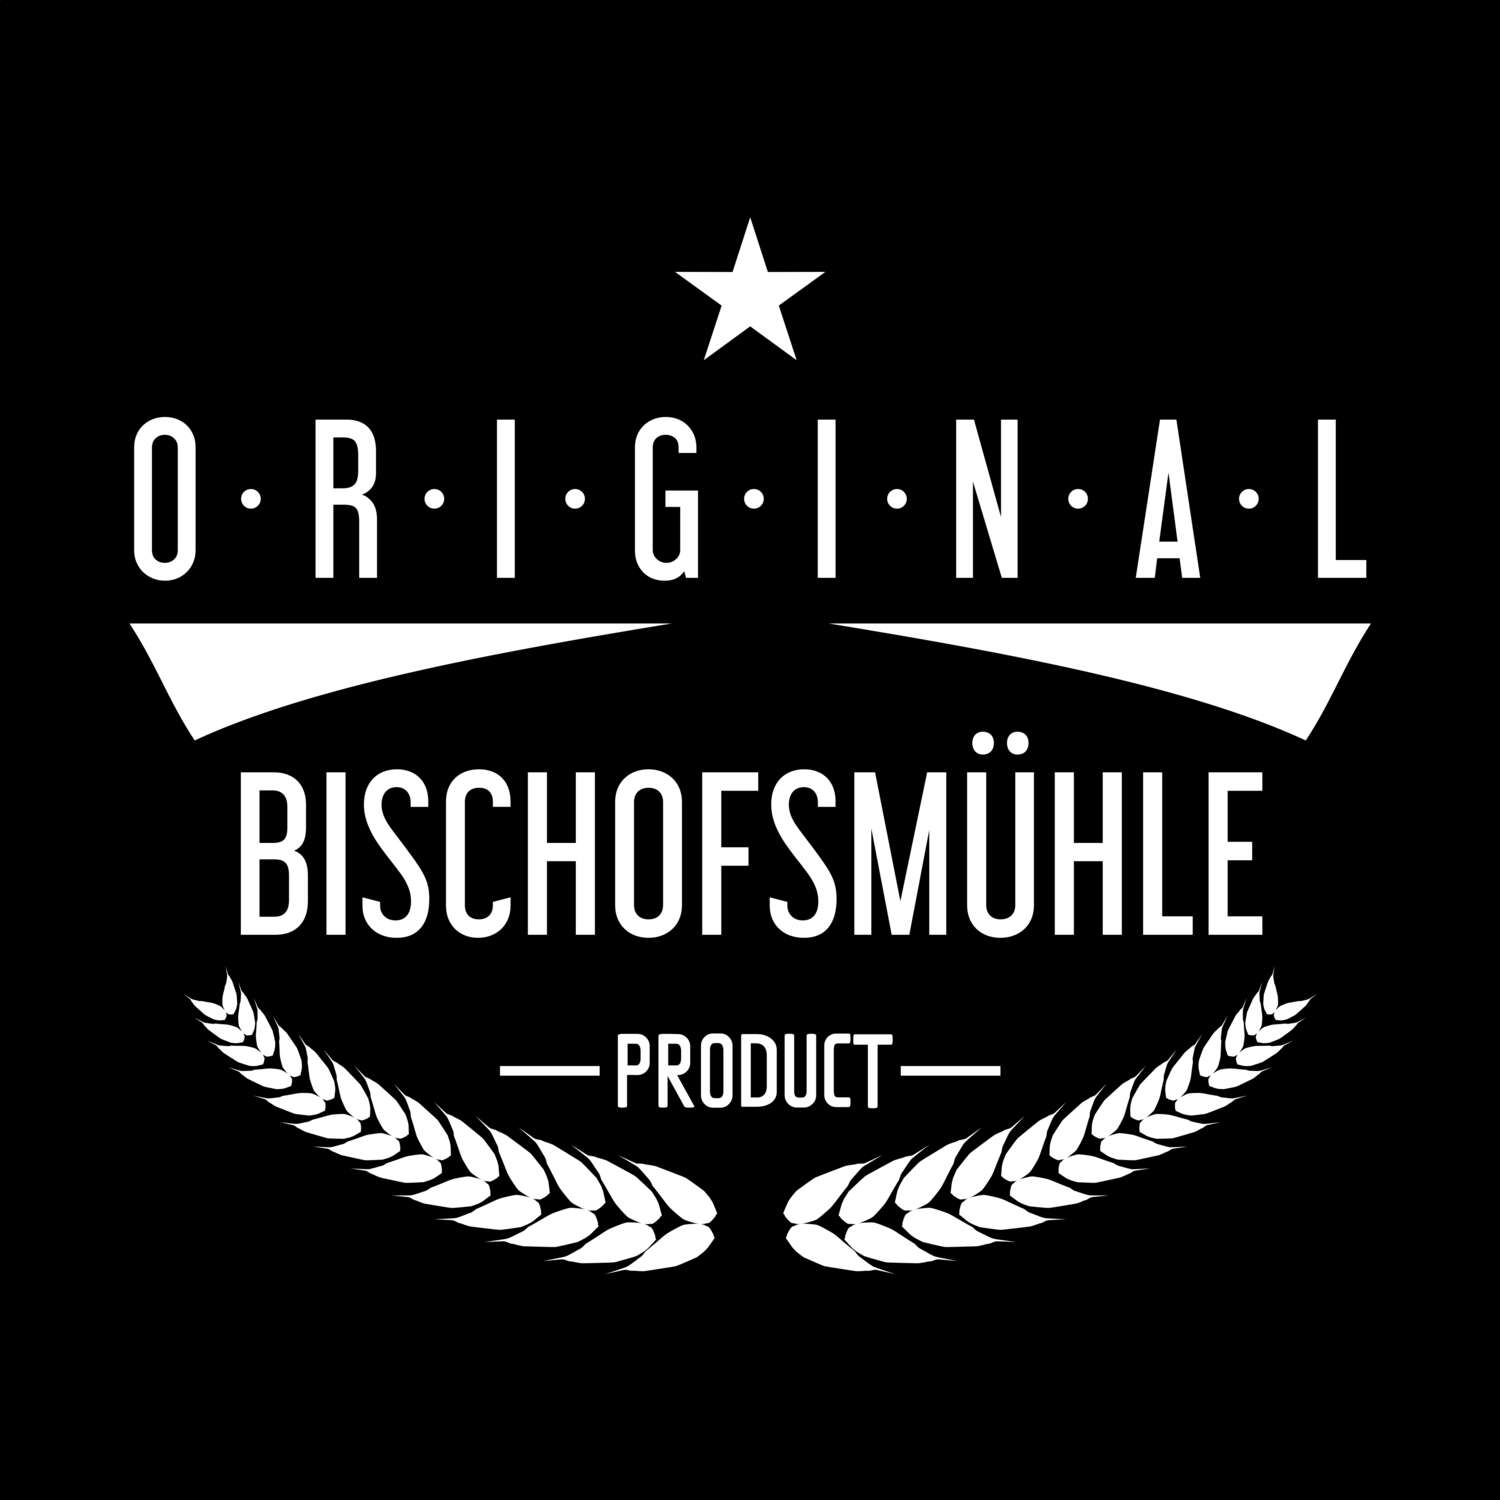 Bischofsmühle T-Shirt »Original Product«